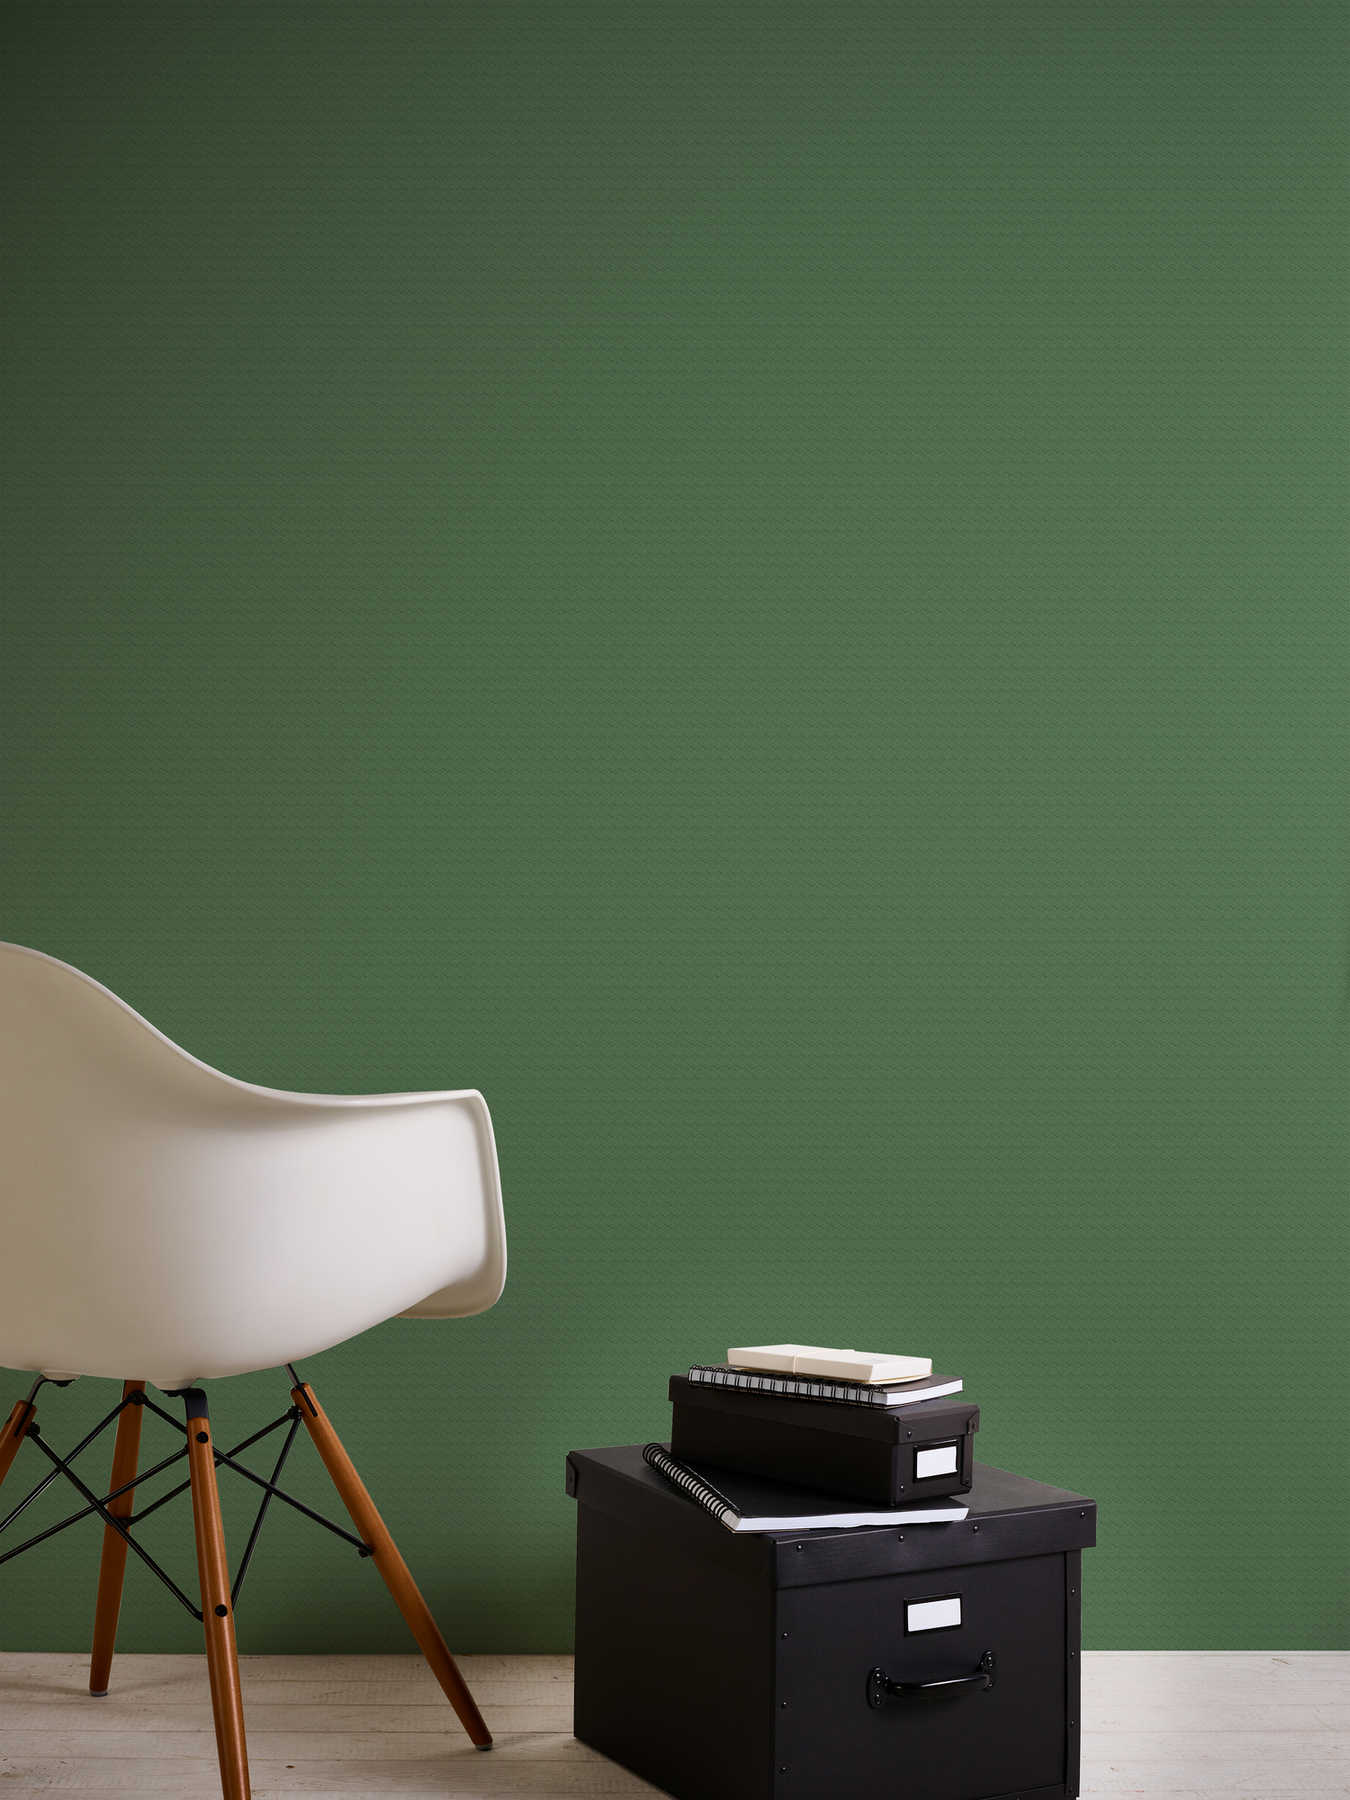             Wallpaper plain, textured with zigzag design - green
        